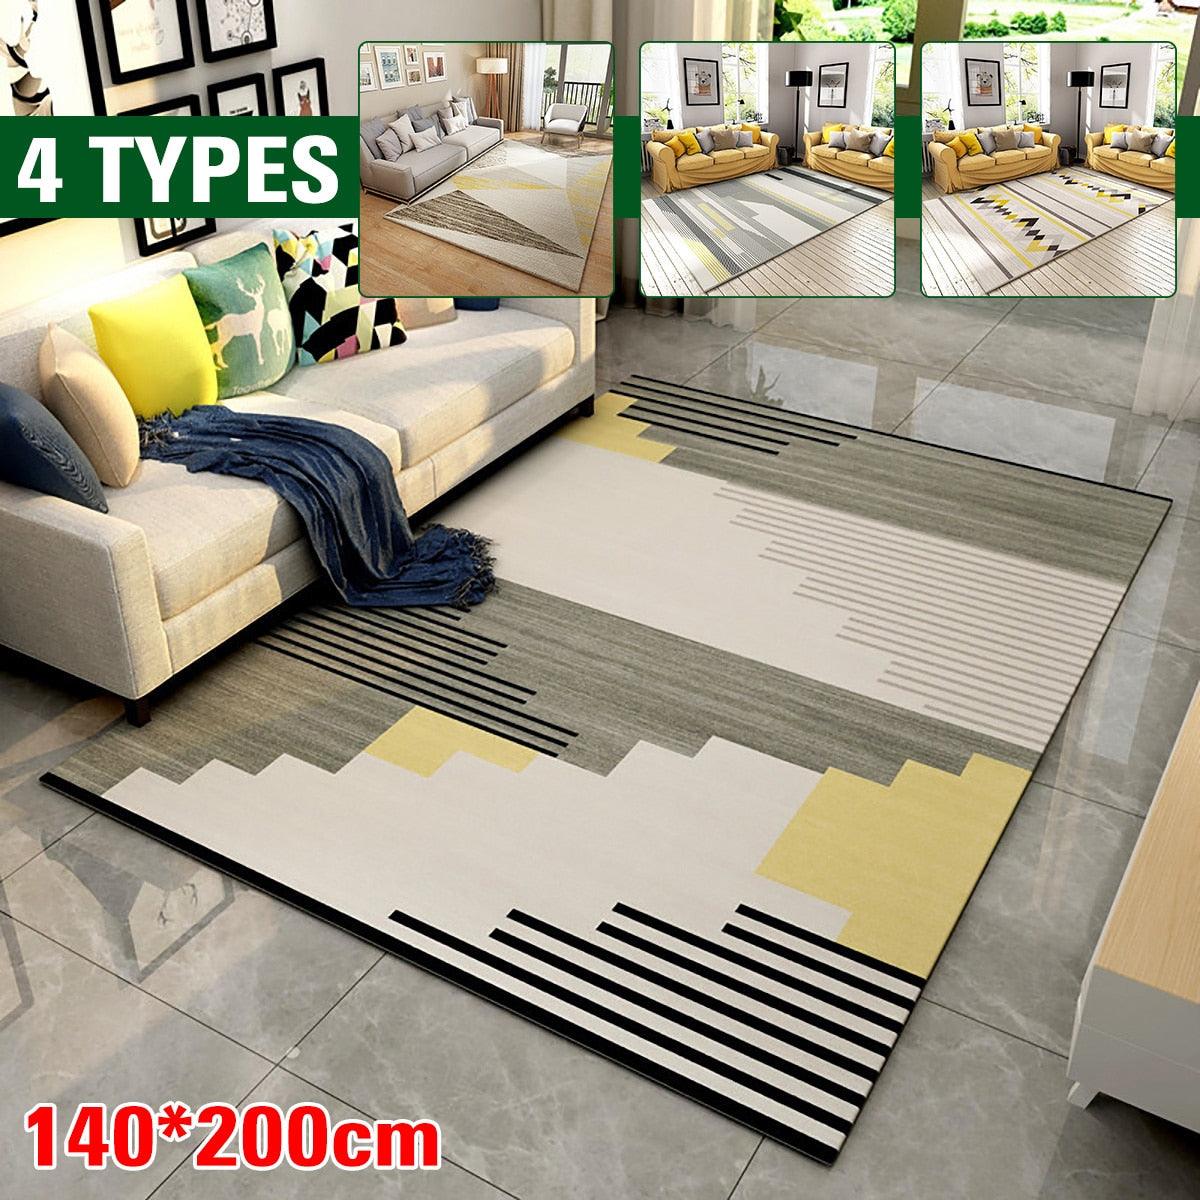 140*200cm Simple Style Rug Living Room Carpet Non-slip Preventing Dislocation Sofa Bedroom (RU2)(RU3)(1U68)(F68)